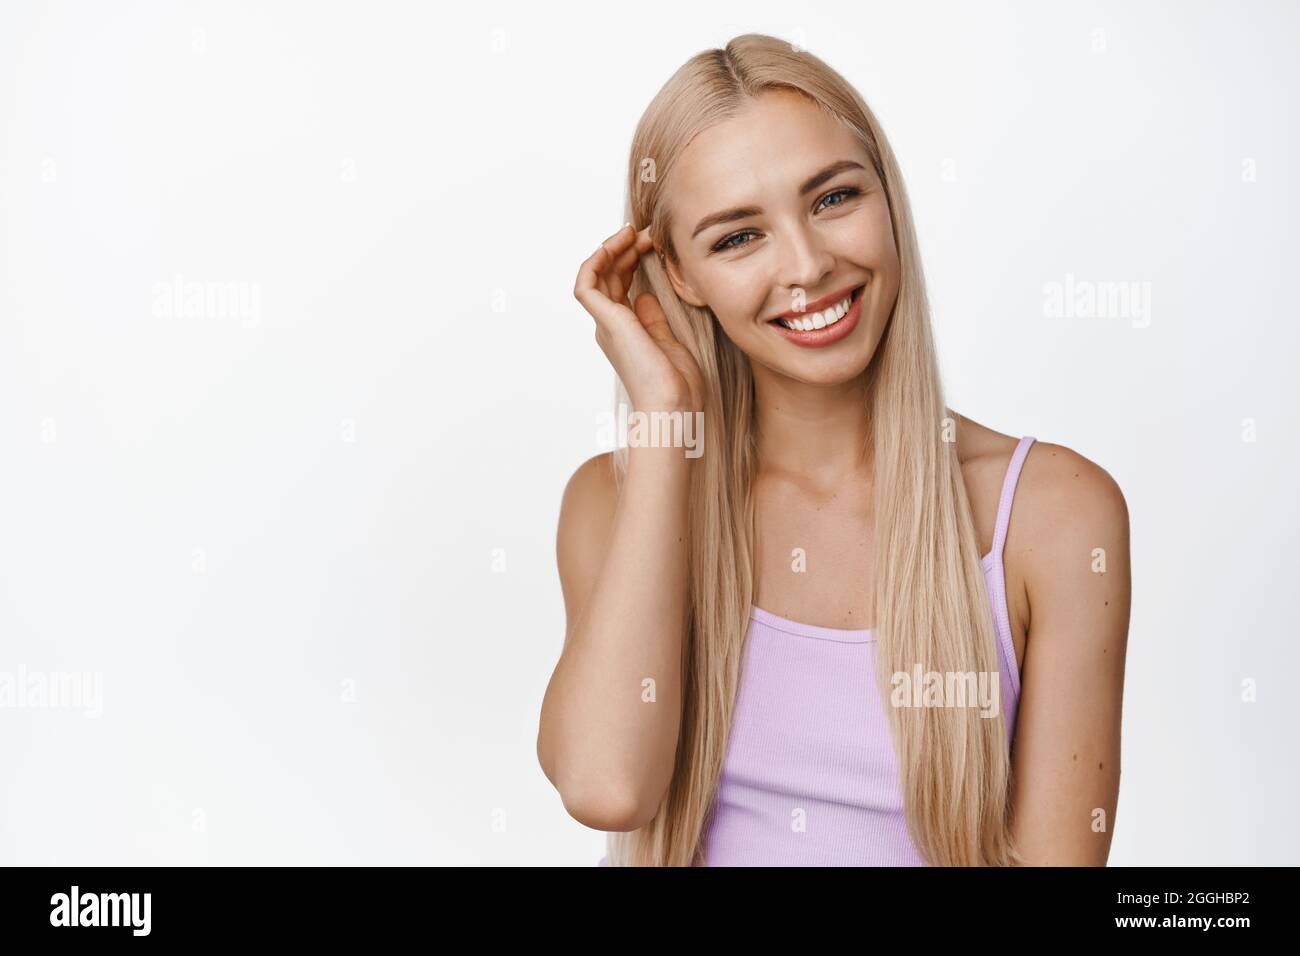 1,562 Hair Tuck Images, Stock Photos & Vectors | Shutterstock